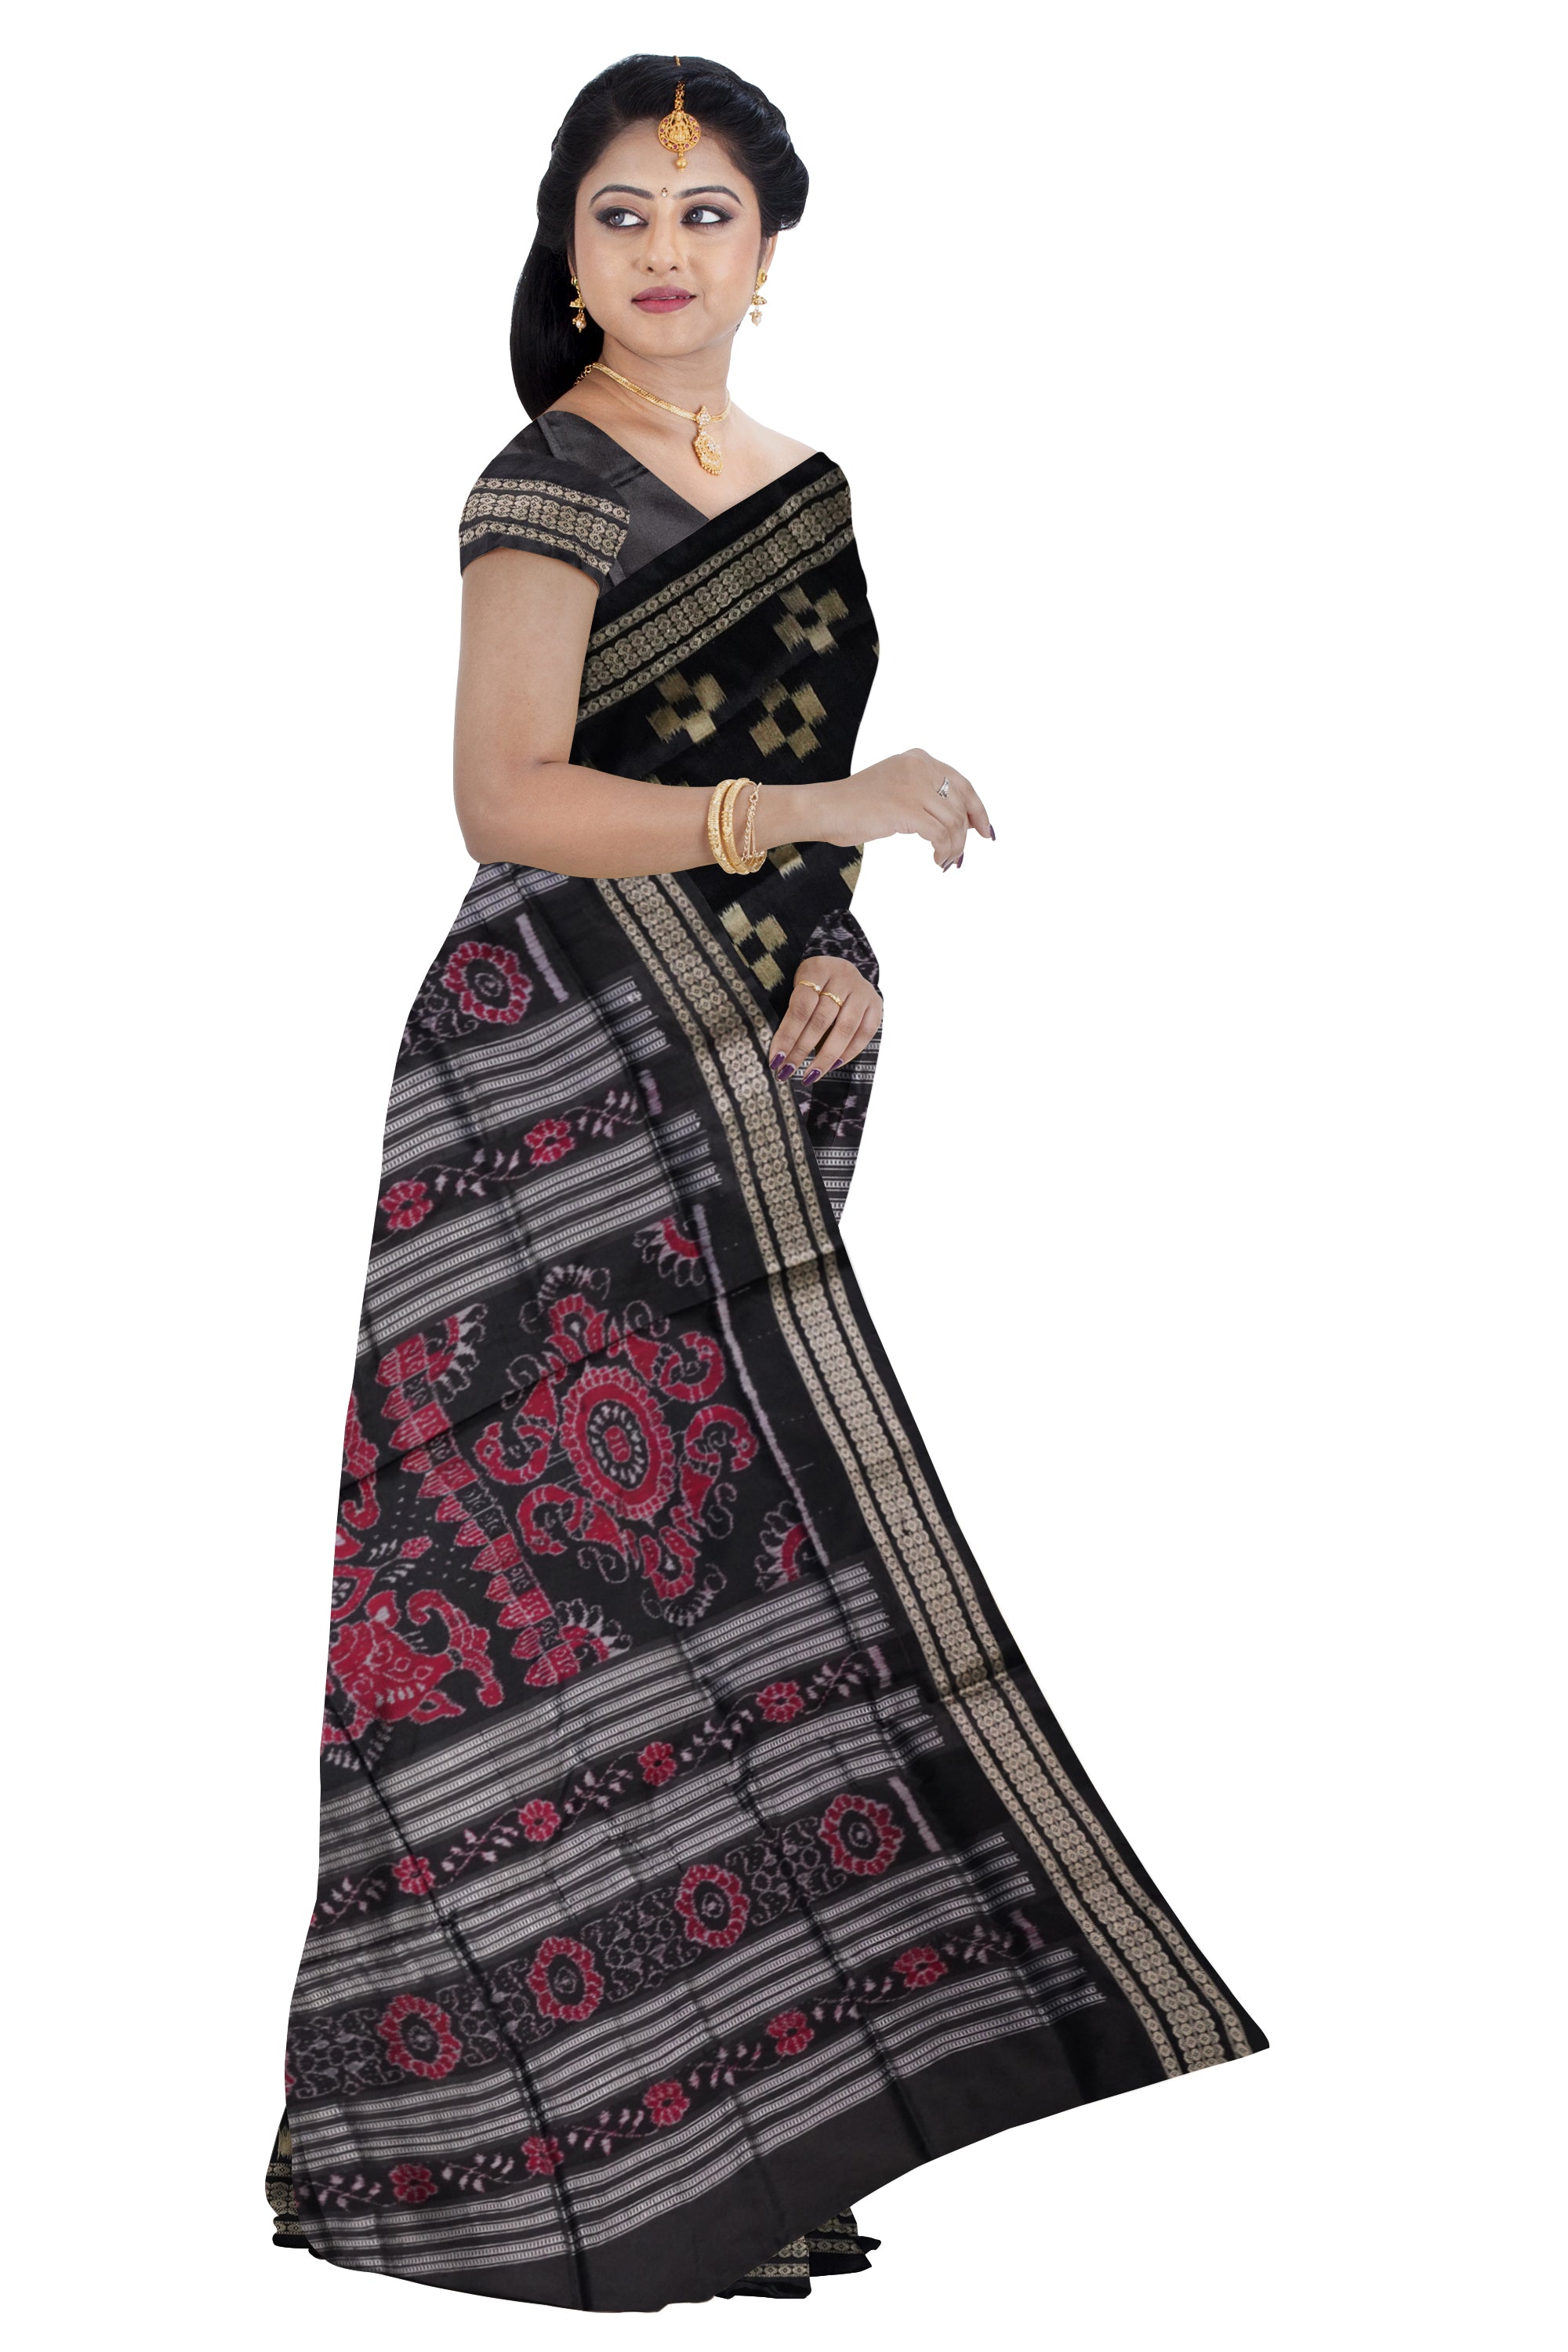 Black & Golden color tara pattern pasapali pata saree. - Koshali Arts & Crafts Enterprise